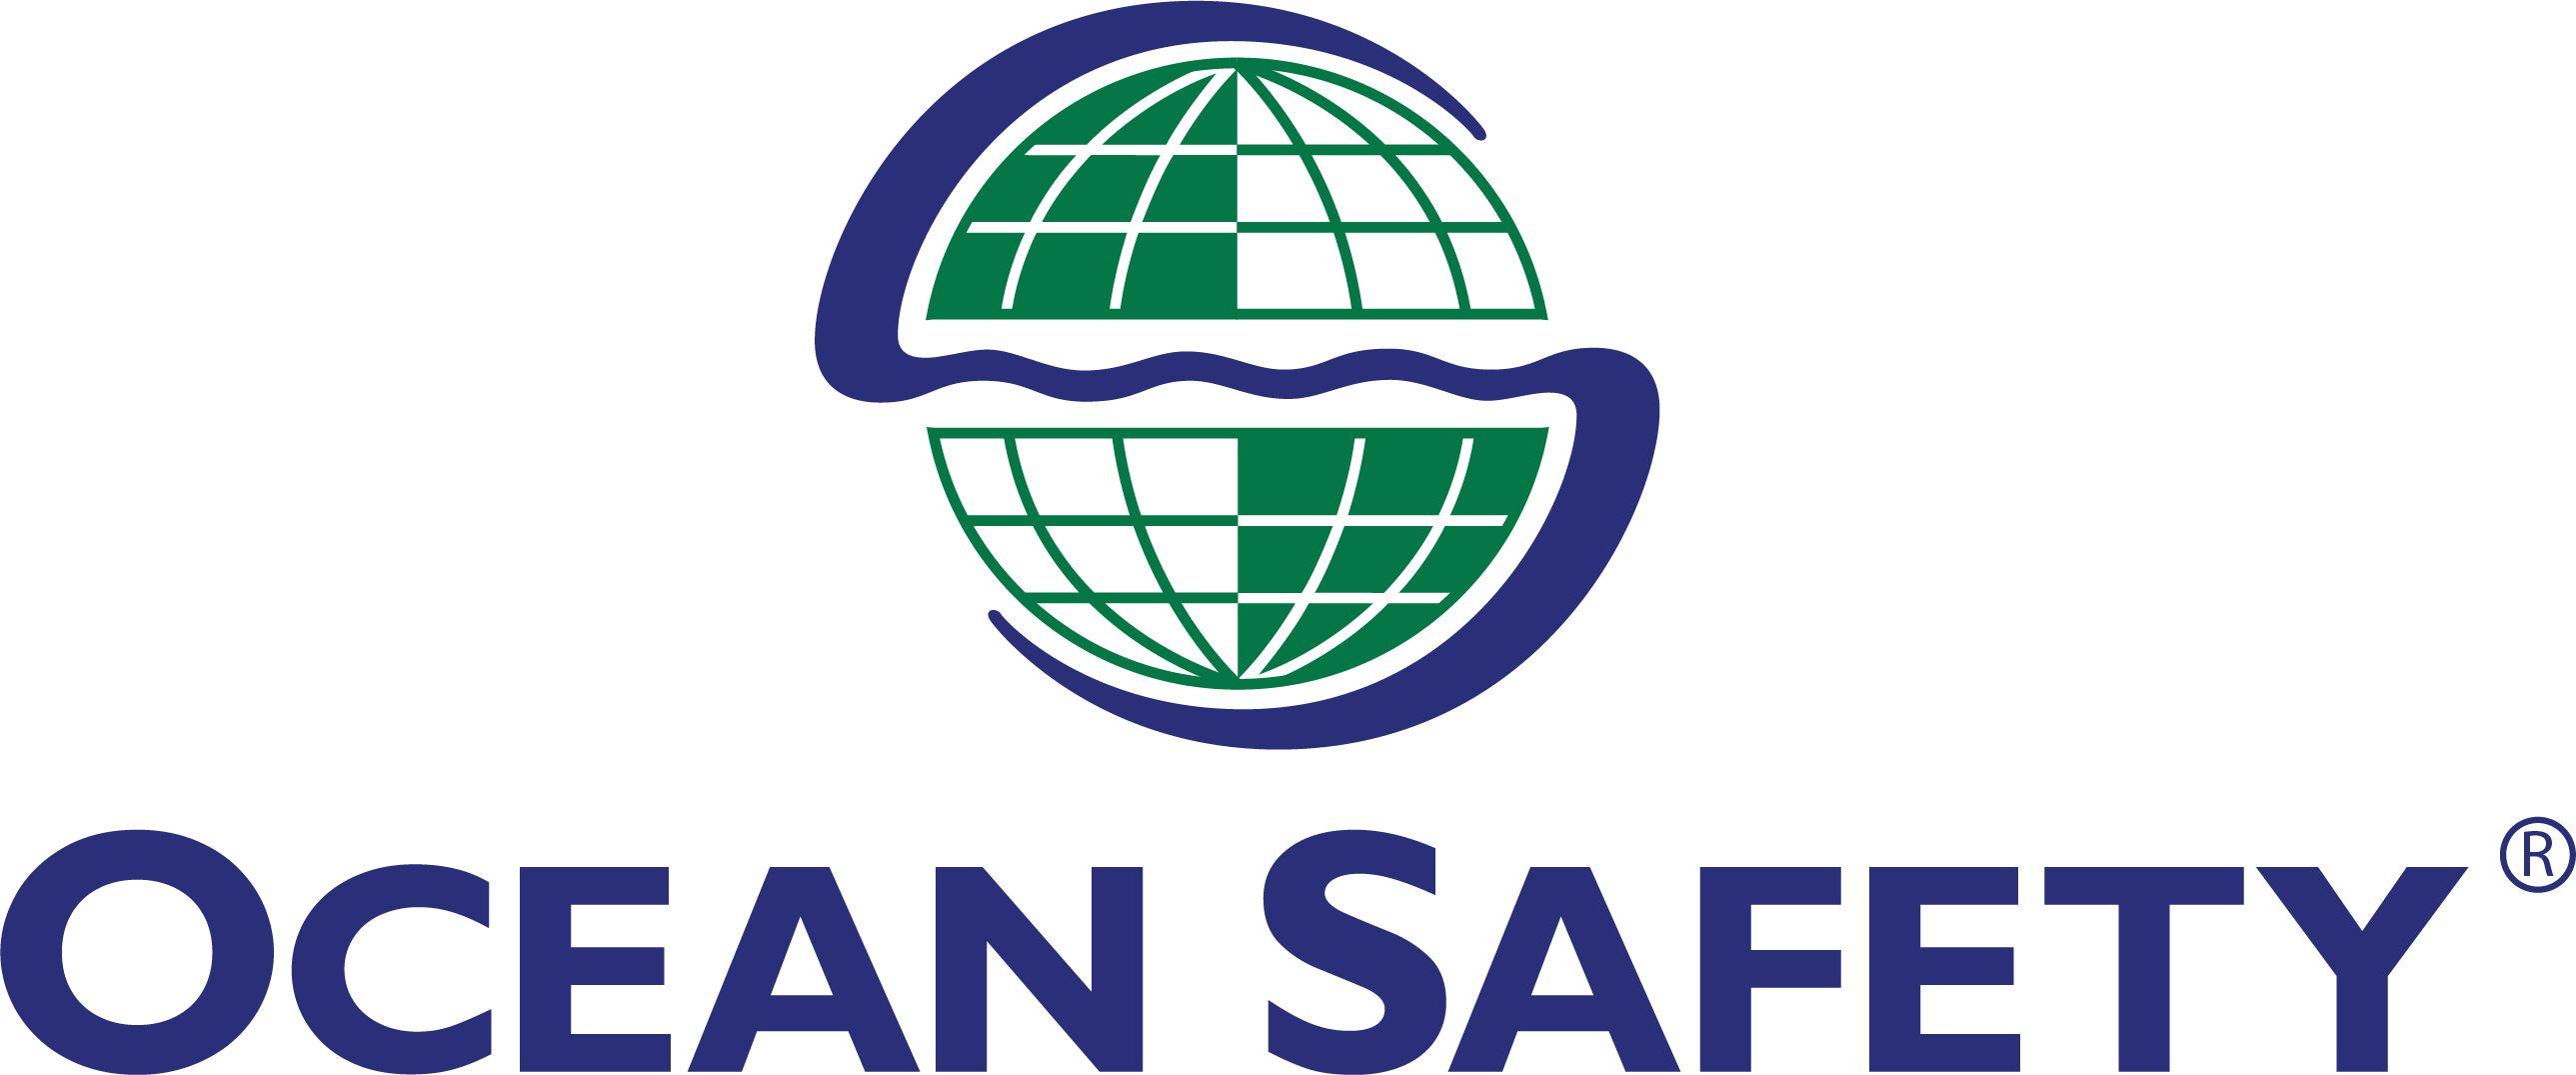 Ocean Company Logo - Ocean Safety Ltd - Home